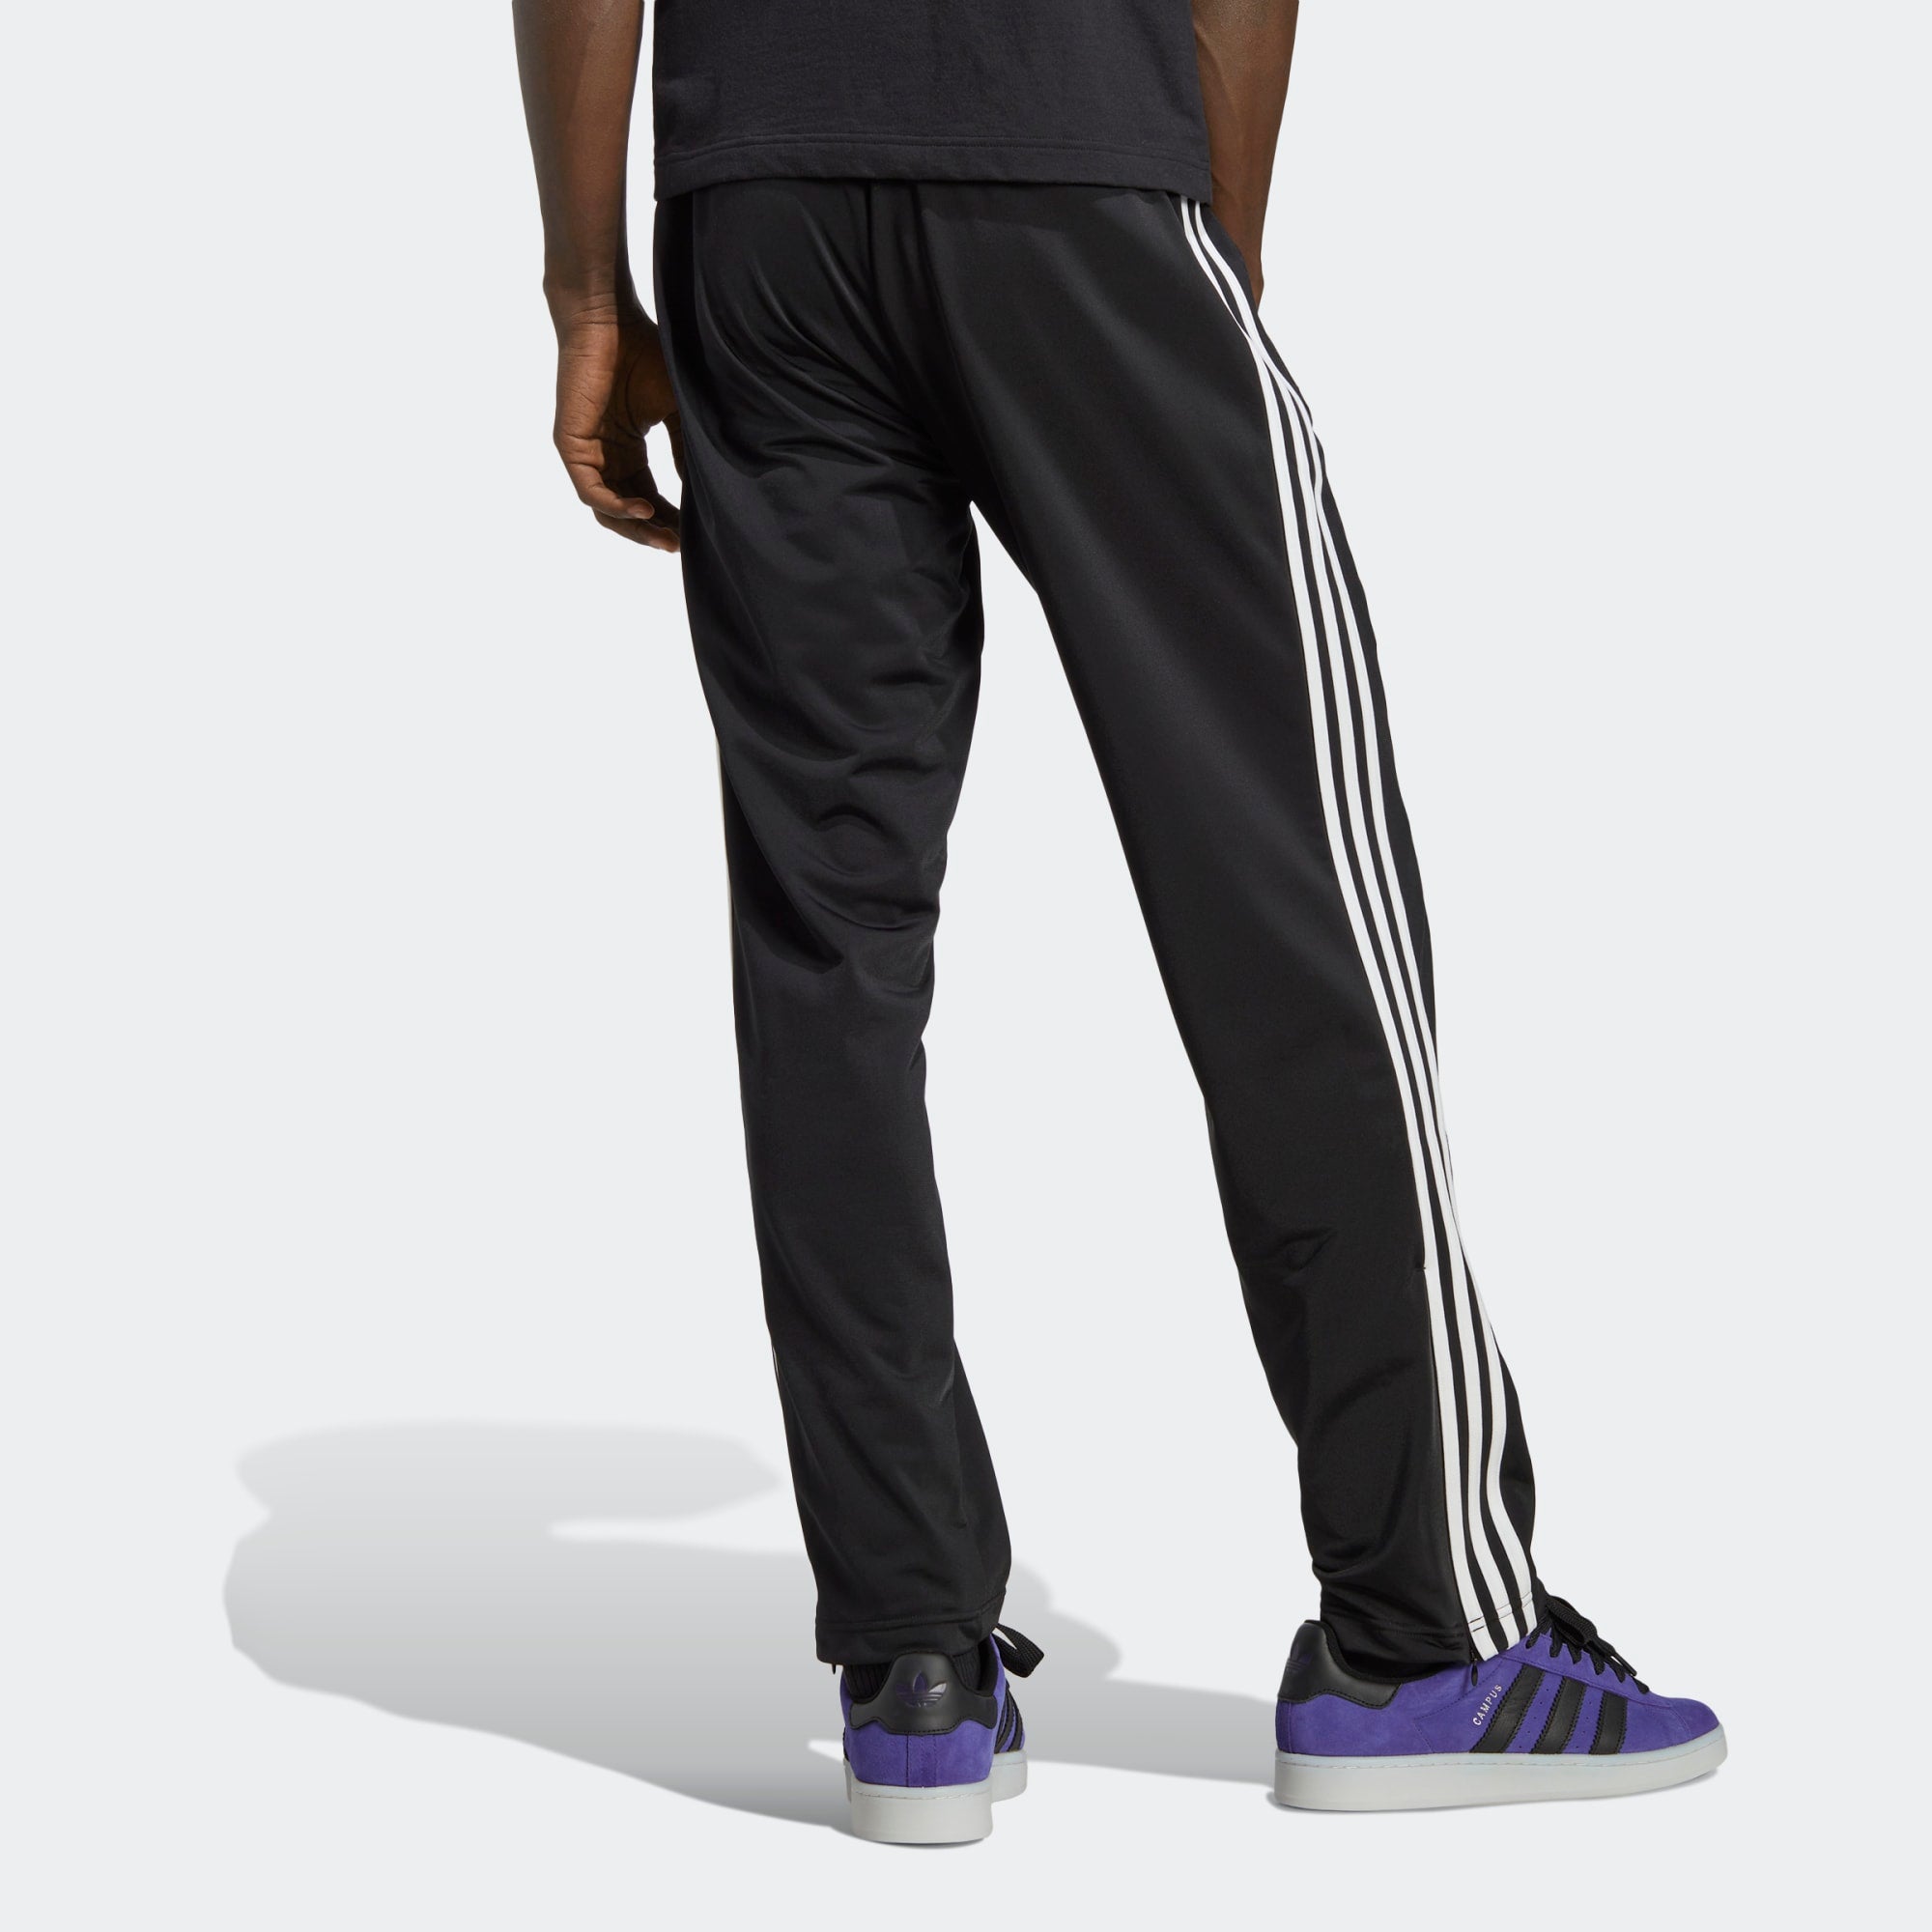 adidas Originals Men's Firebird Track Pants ED7012 | eBay